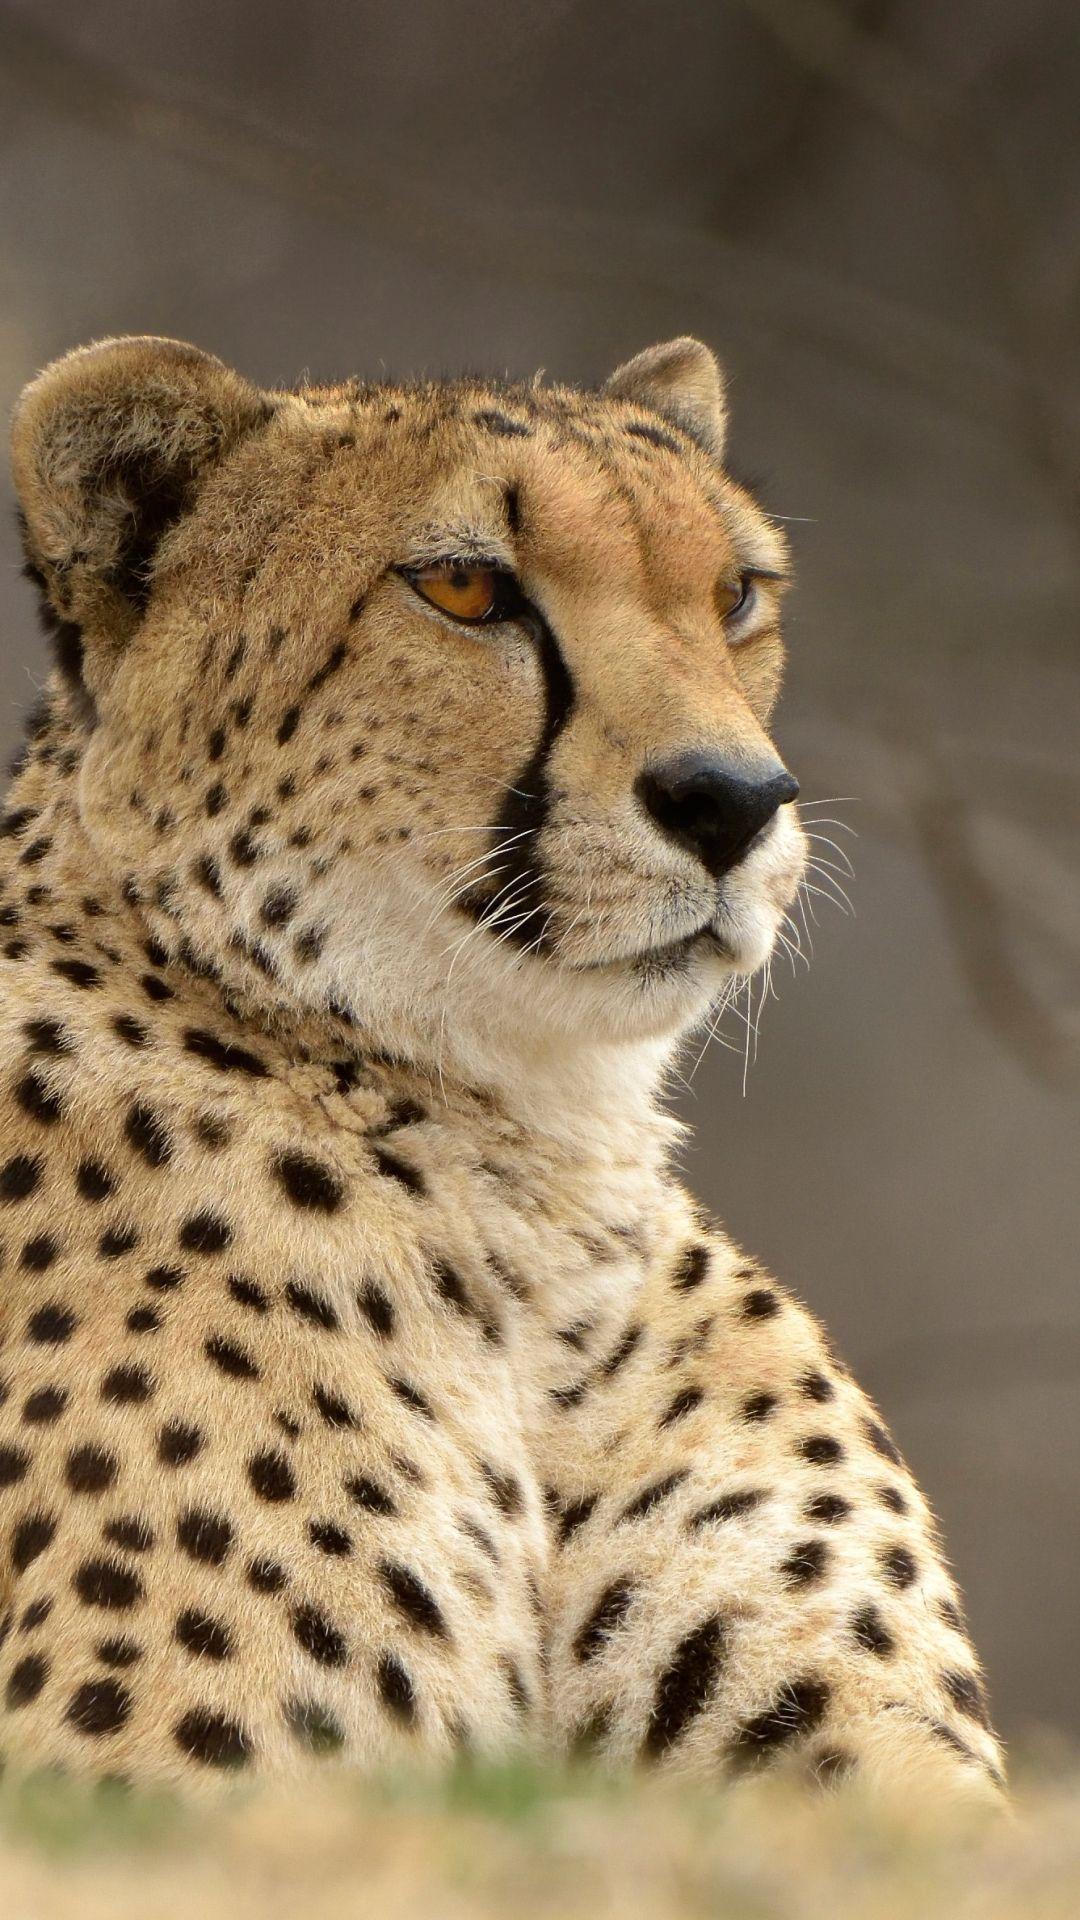 Animal / Cheetah (1080x1920) Mobile Wallpaper -> Link in bio to